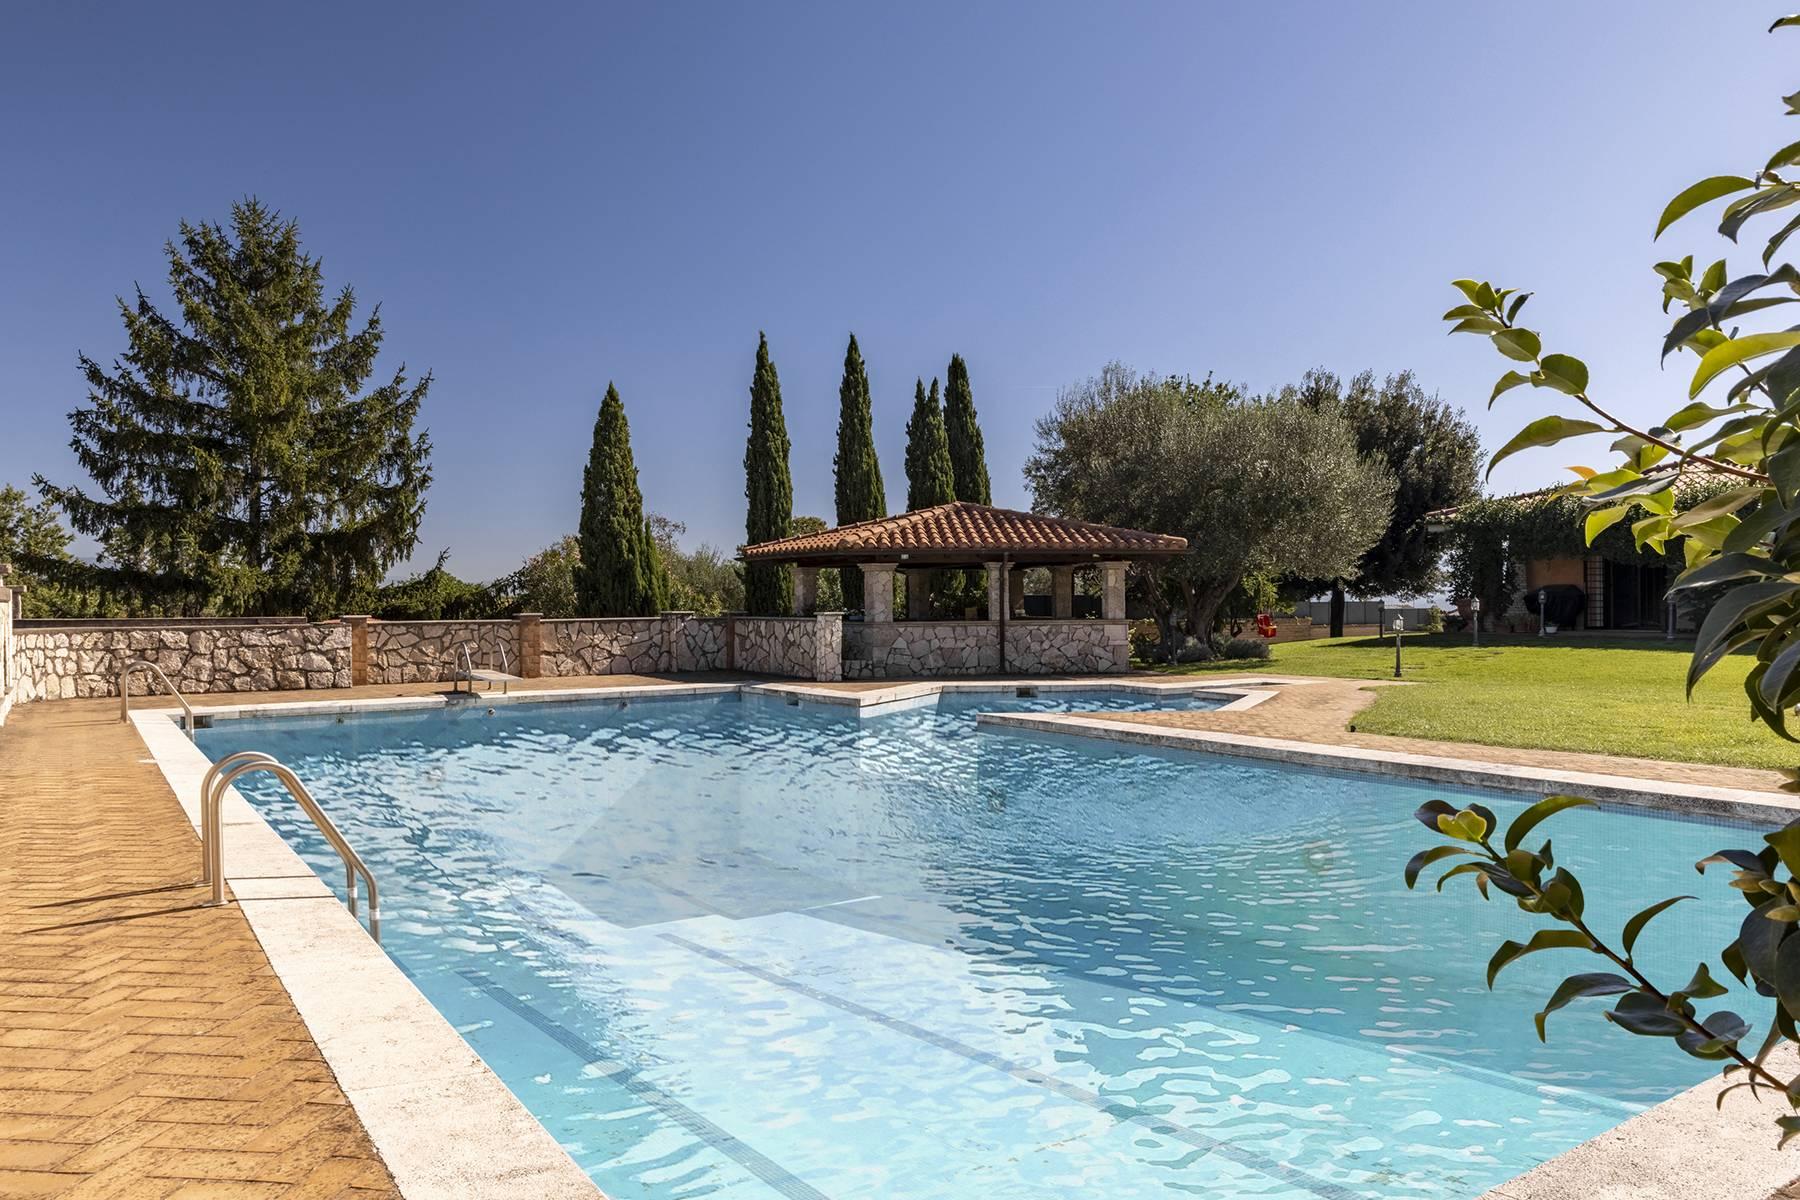 Moderna villa con piscina a due passi da Roma - 13